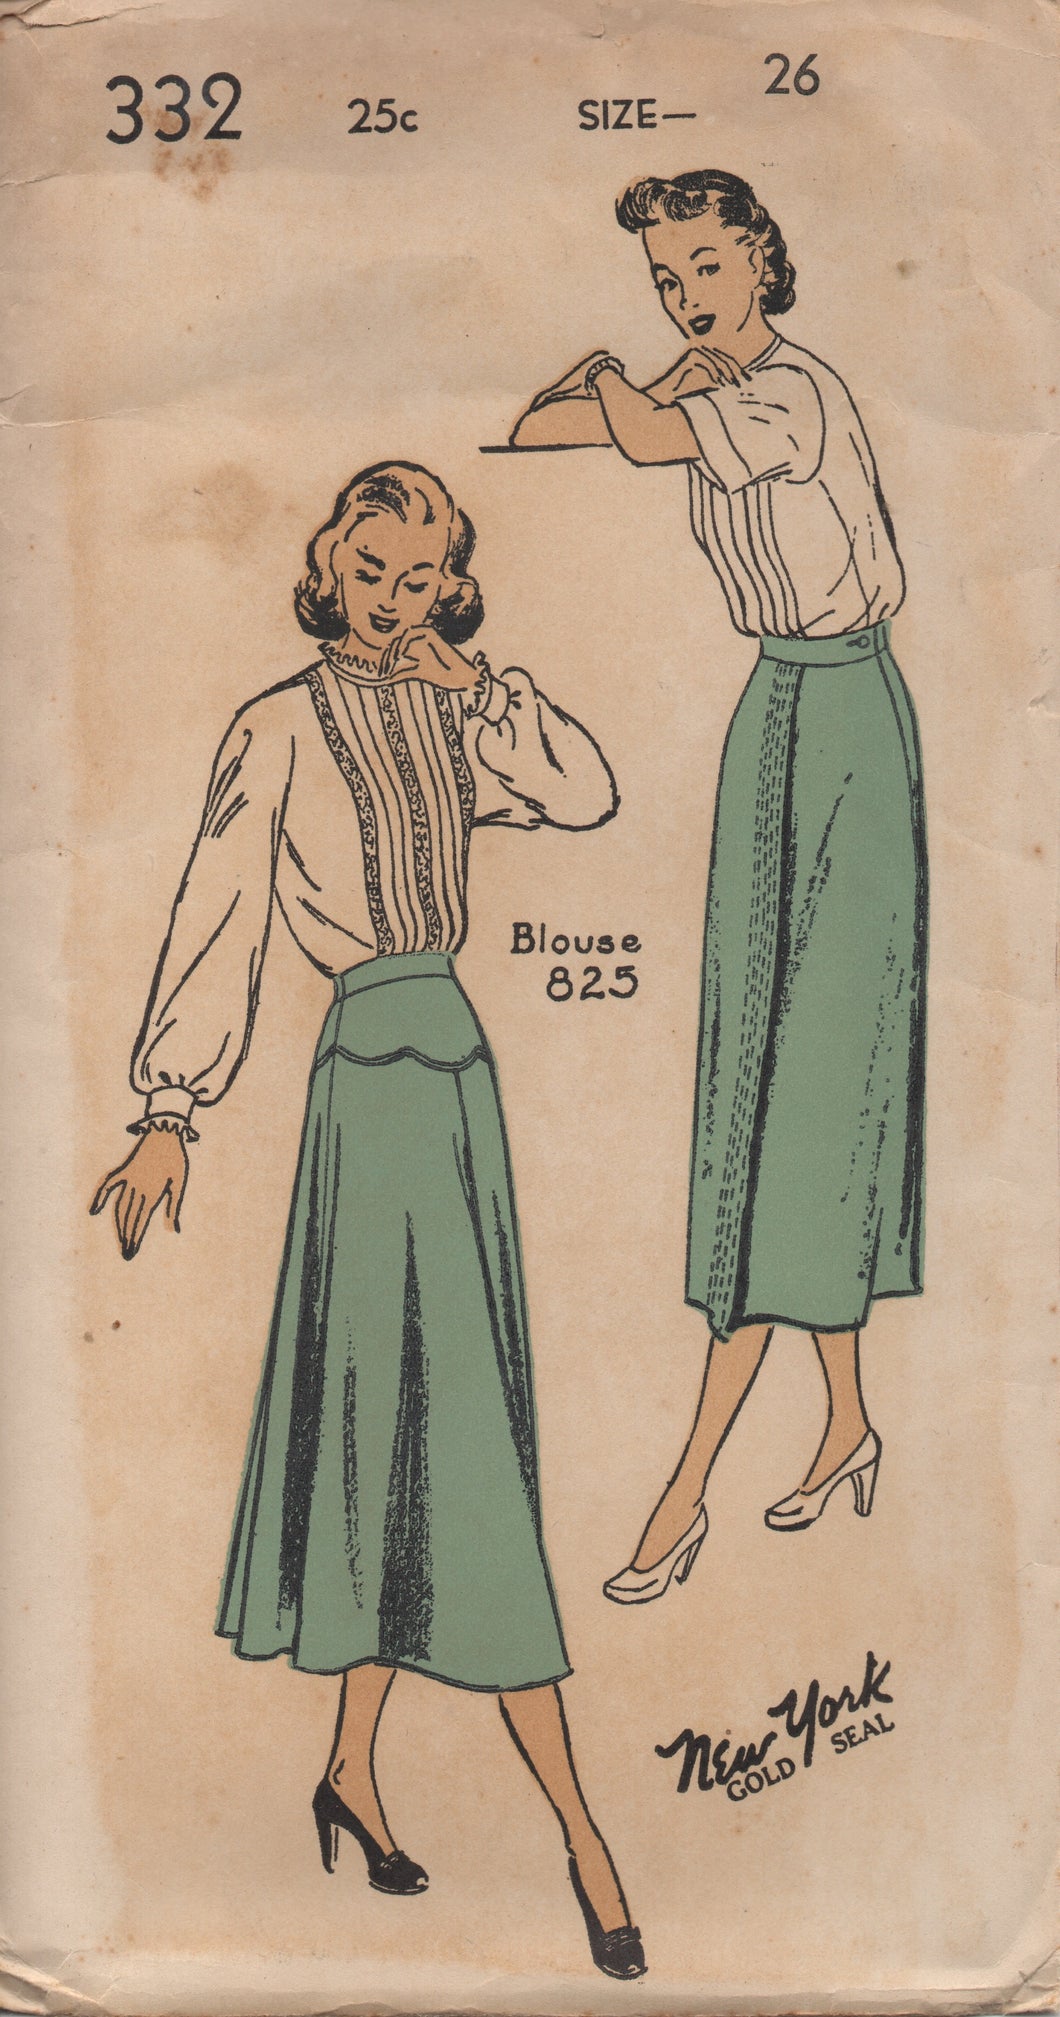 1940's New York Skirt with scallop skirt yoke or straight skirt - Waist 26